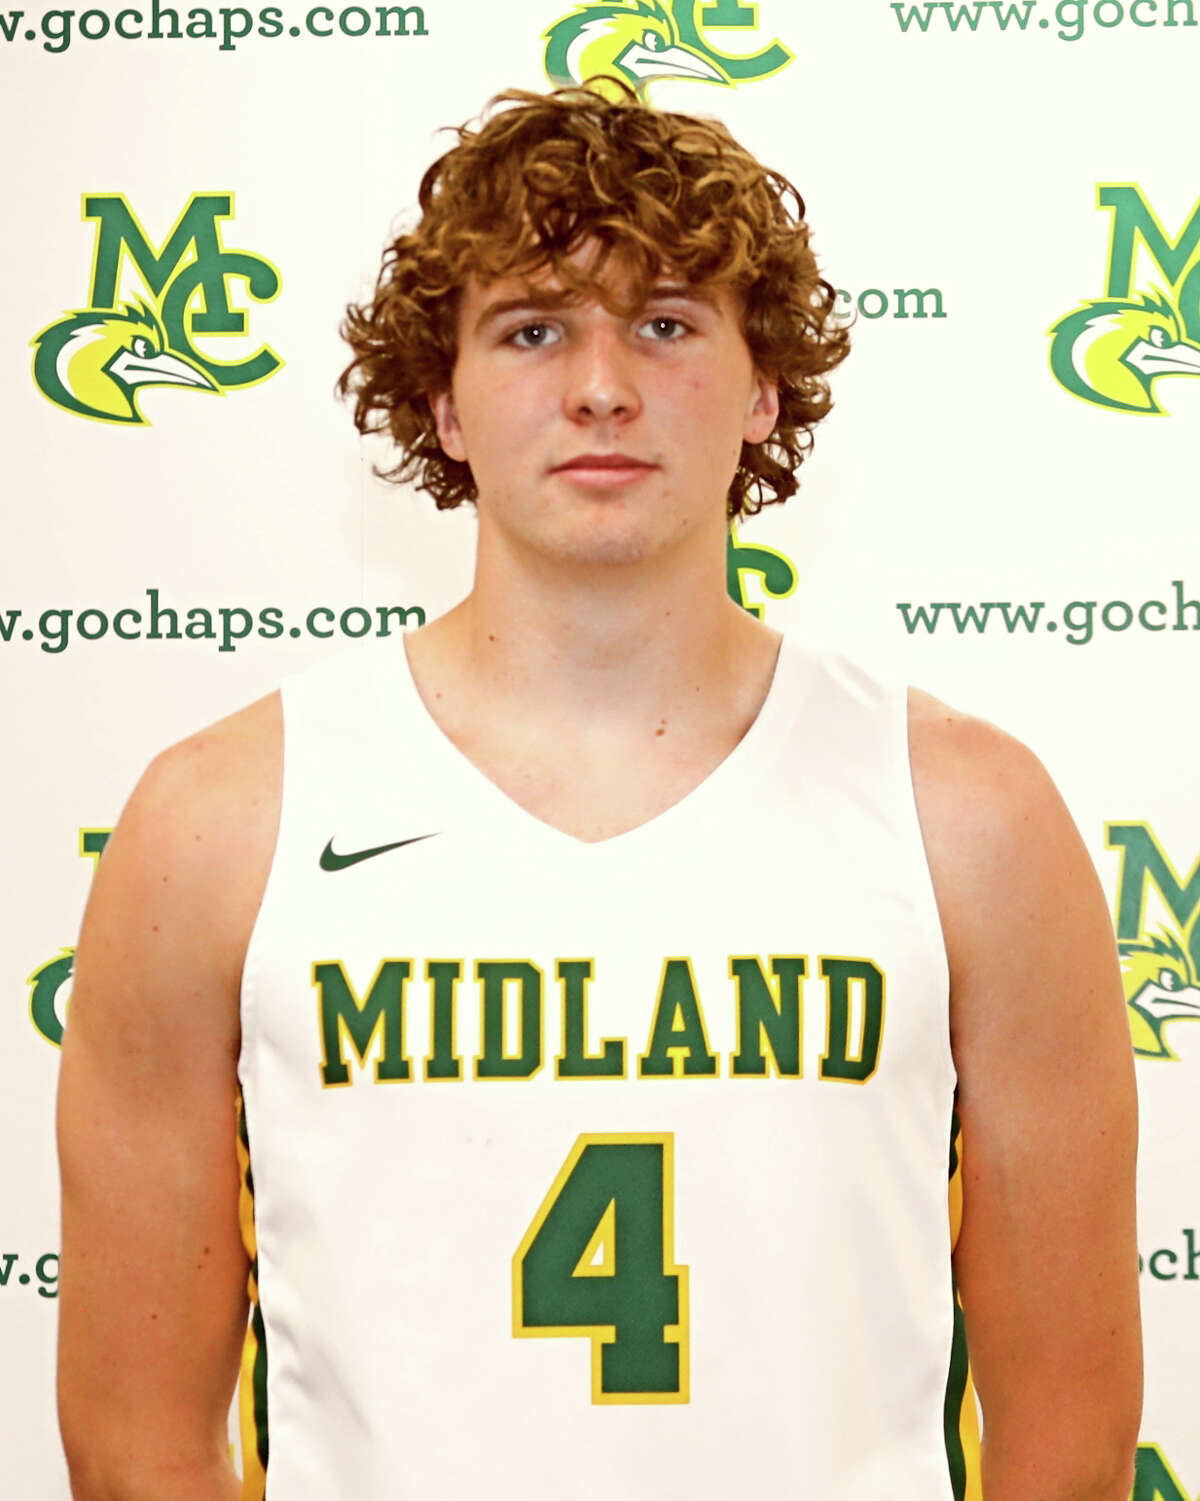 Midland College men's basketball player Trent Johnson 